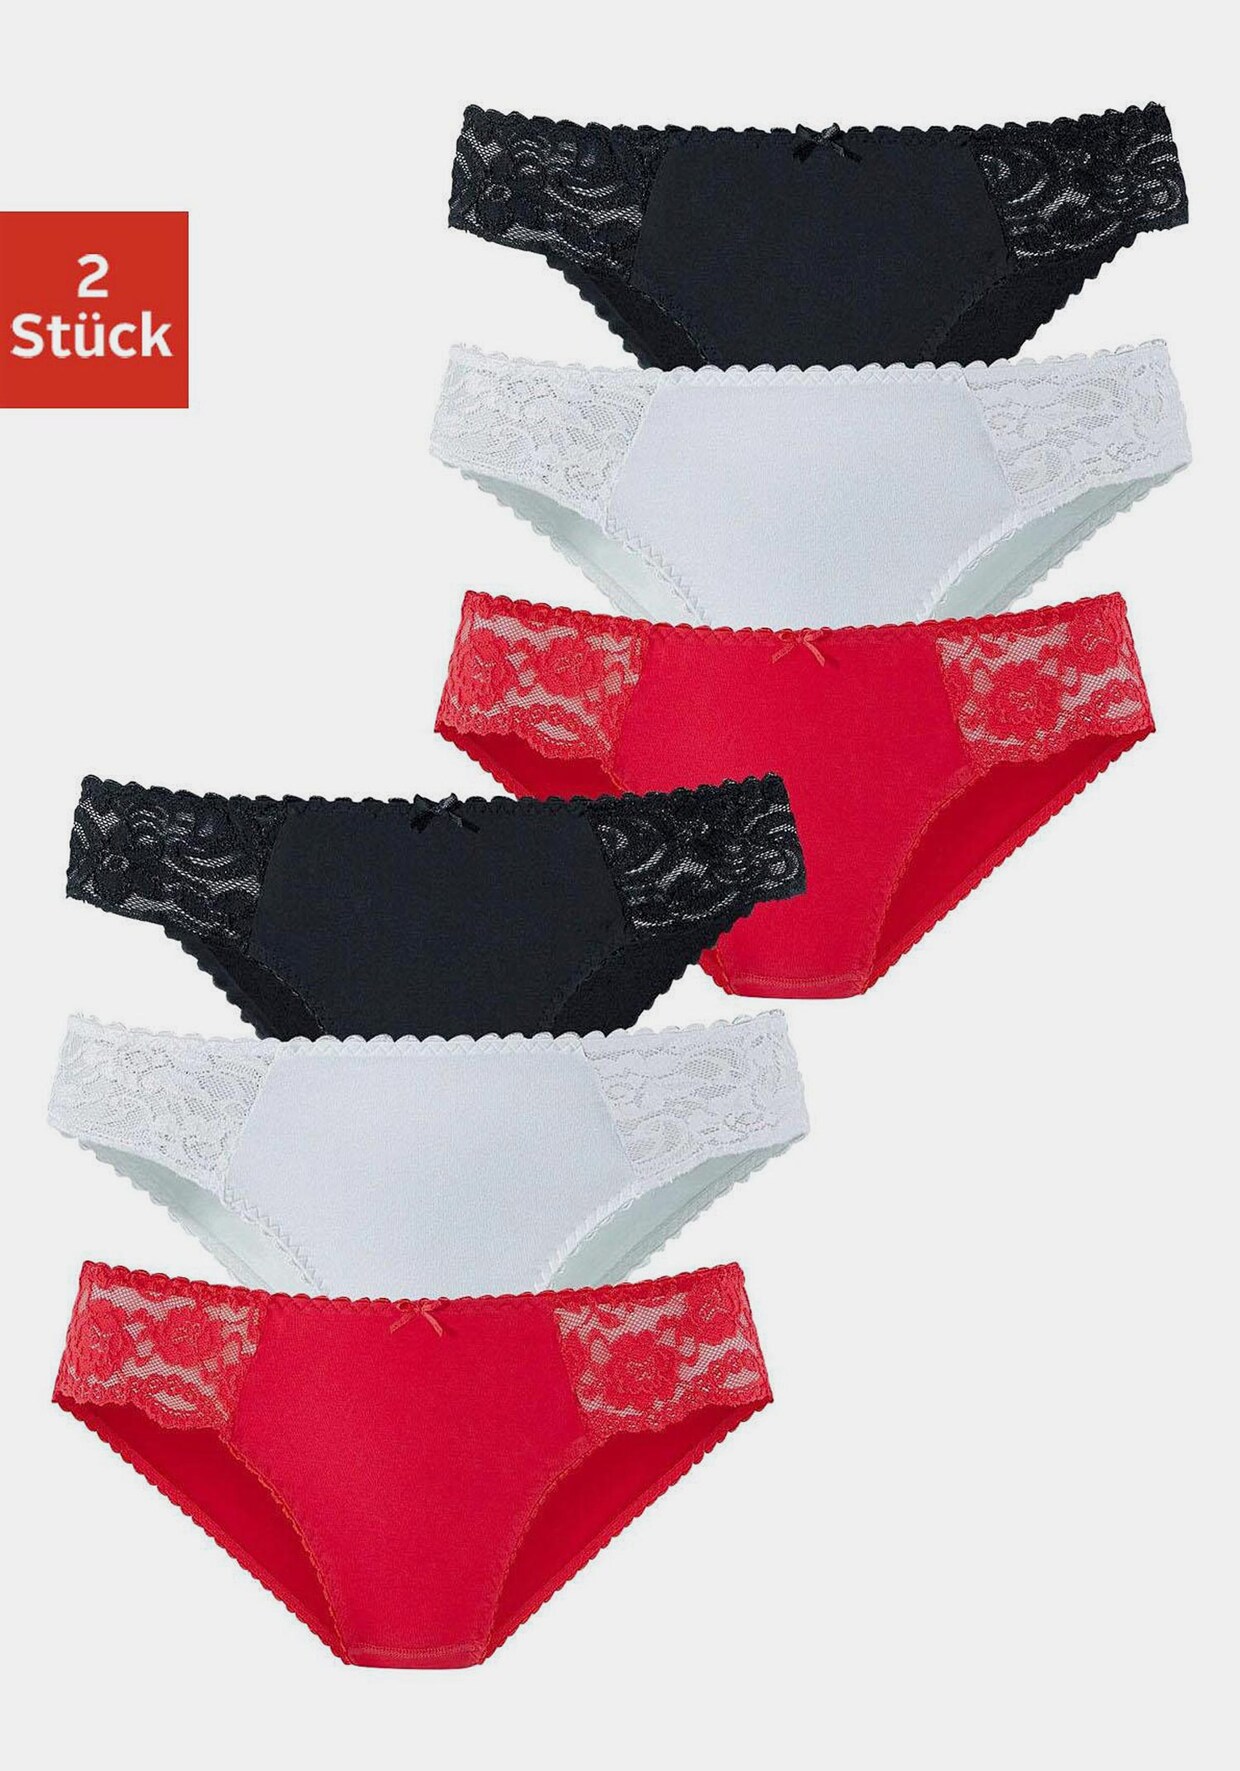 petite fleur Jazz-pants slips - 1x rood + 1x zwart + 1x wit